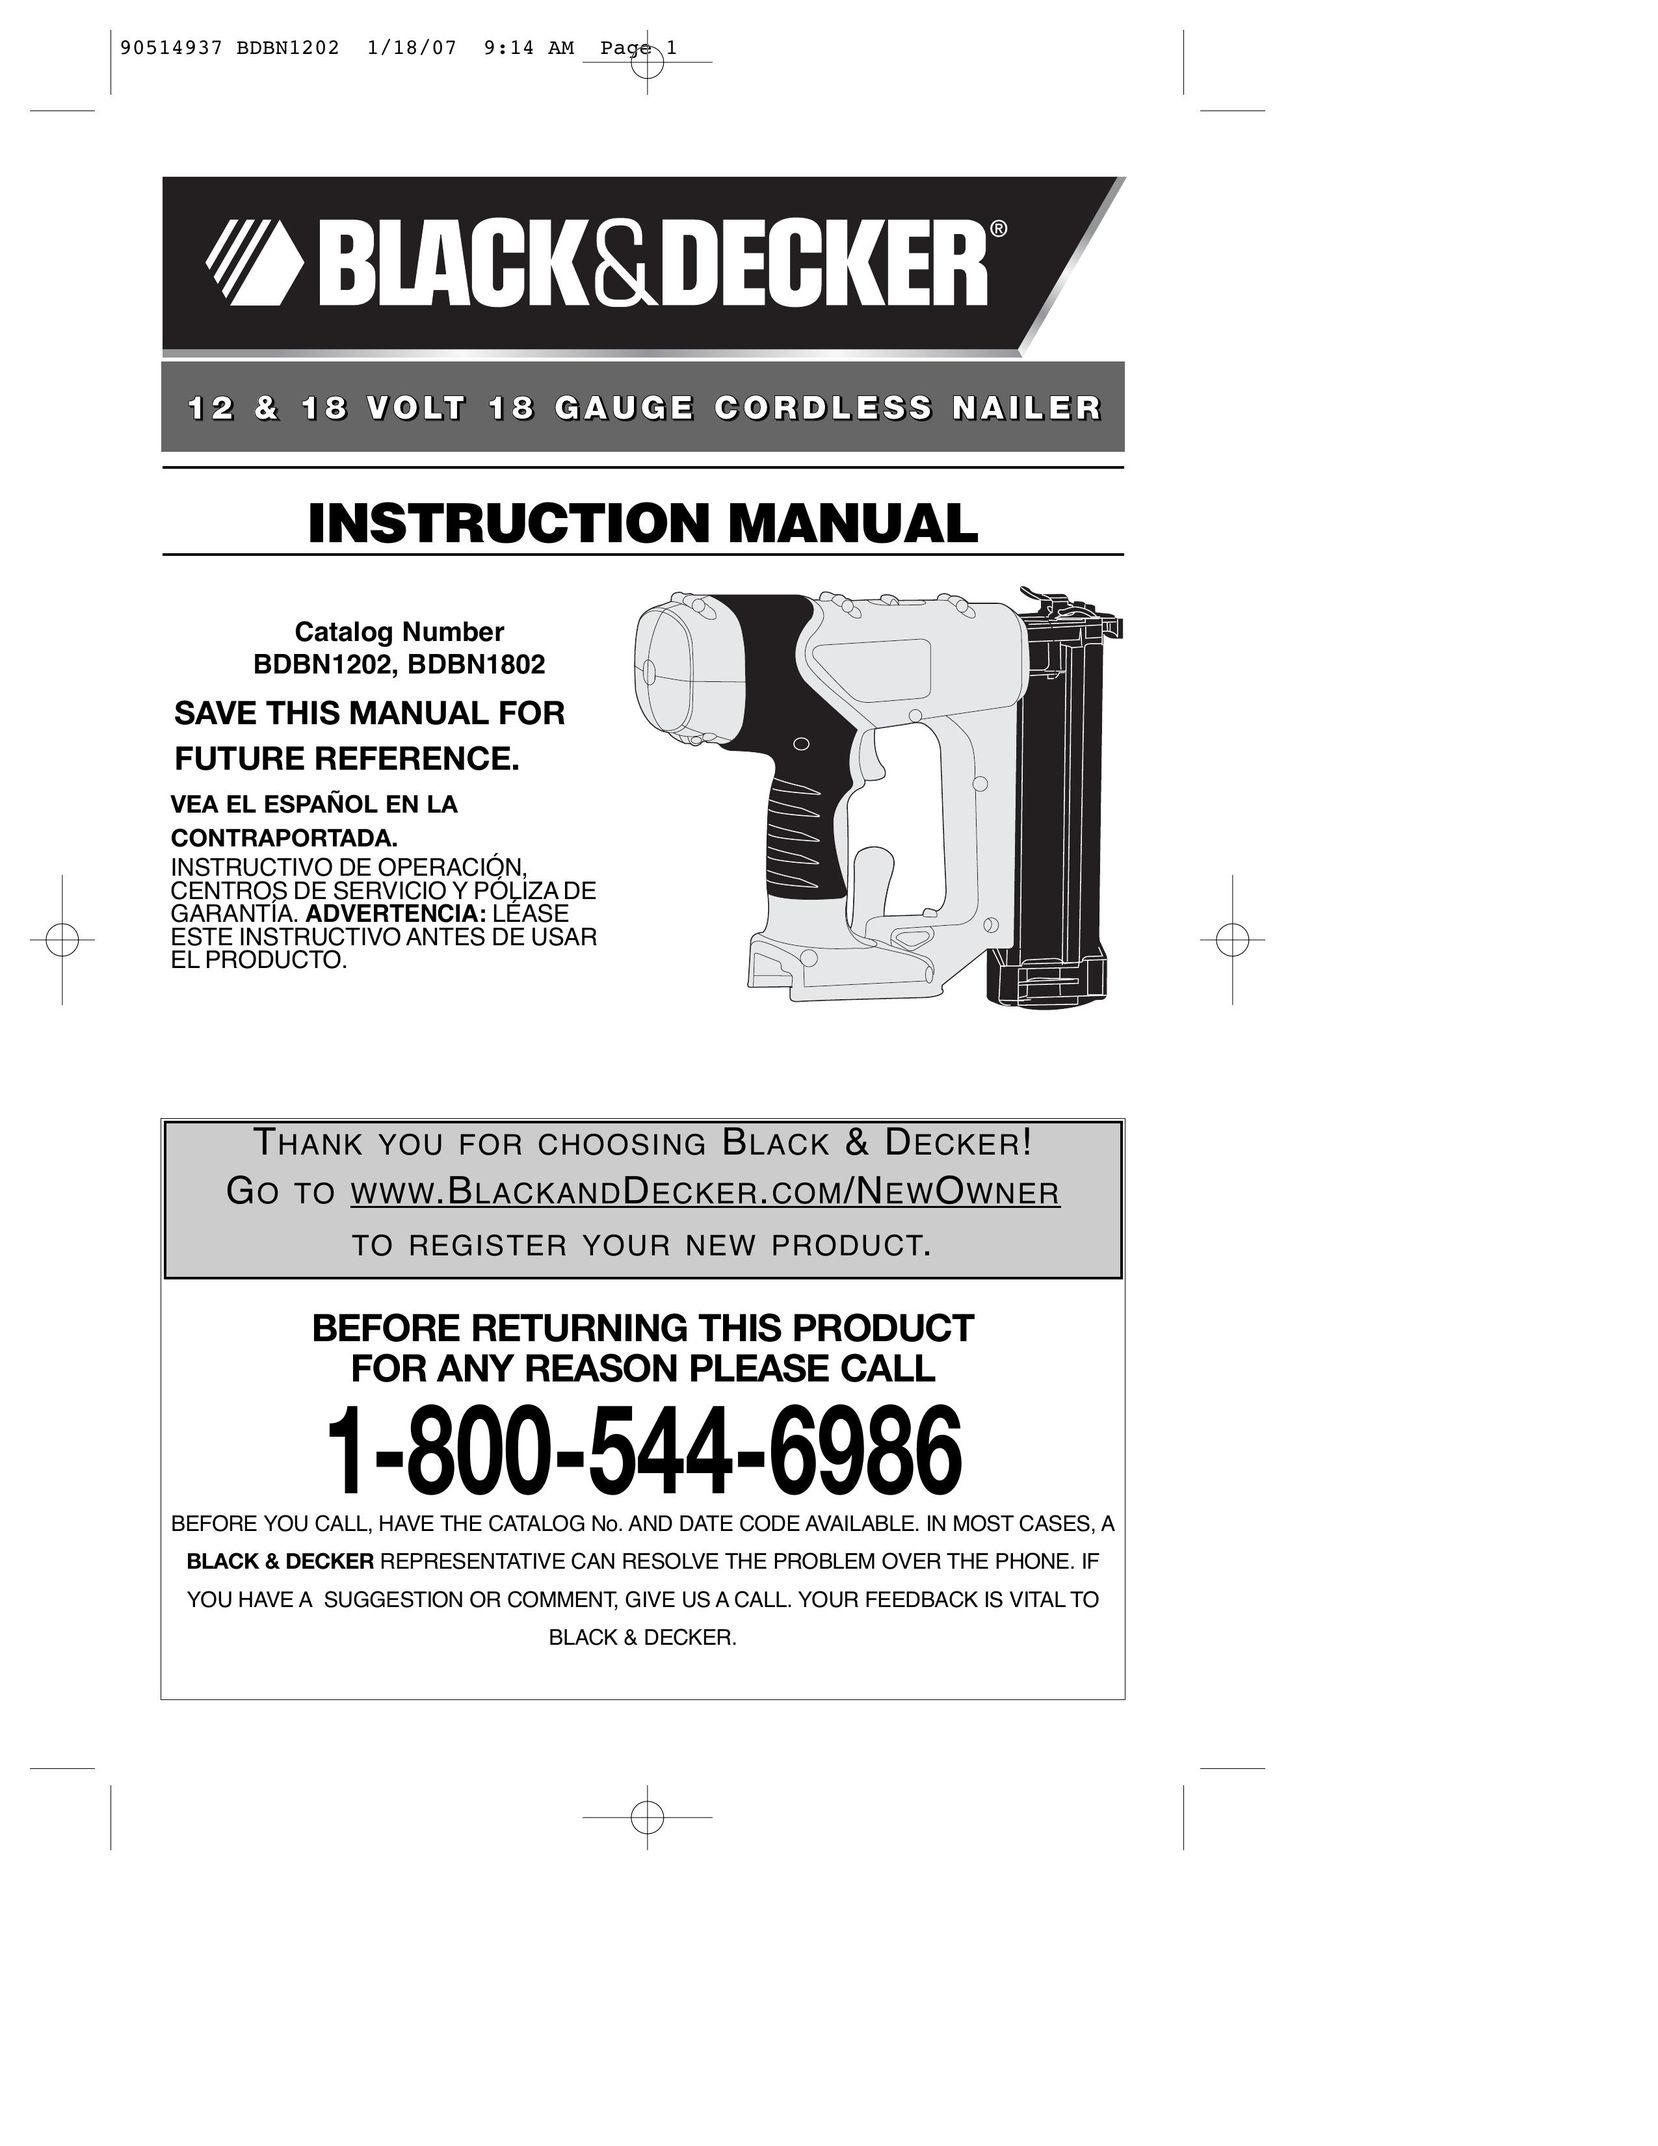 Black & Decker 90514937 Nail Gun User Manual